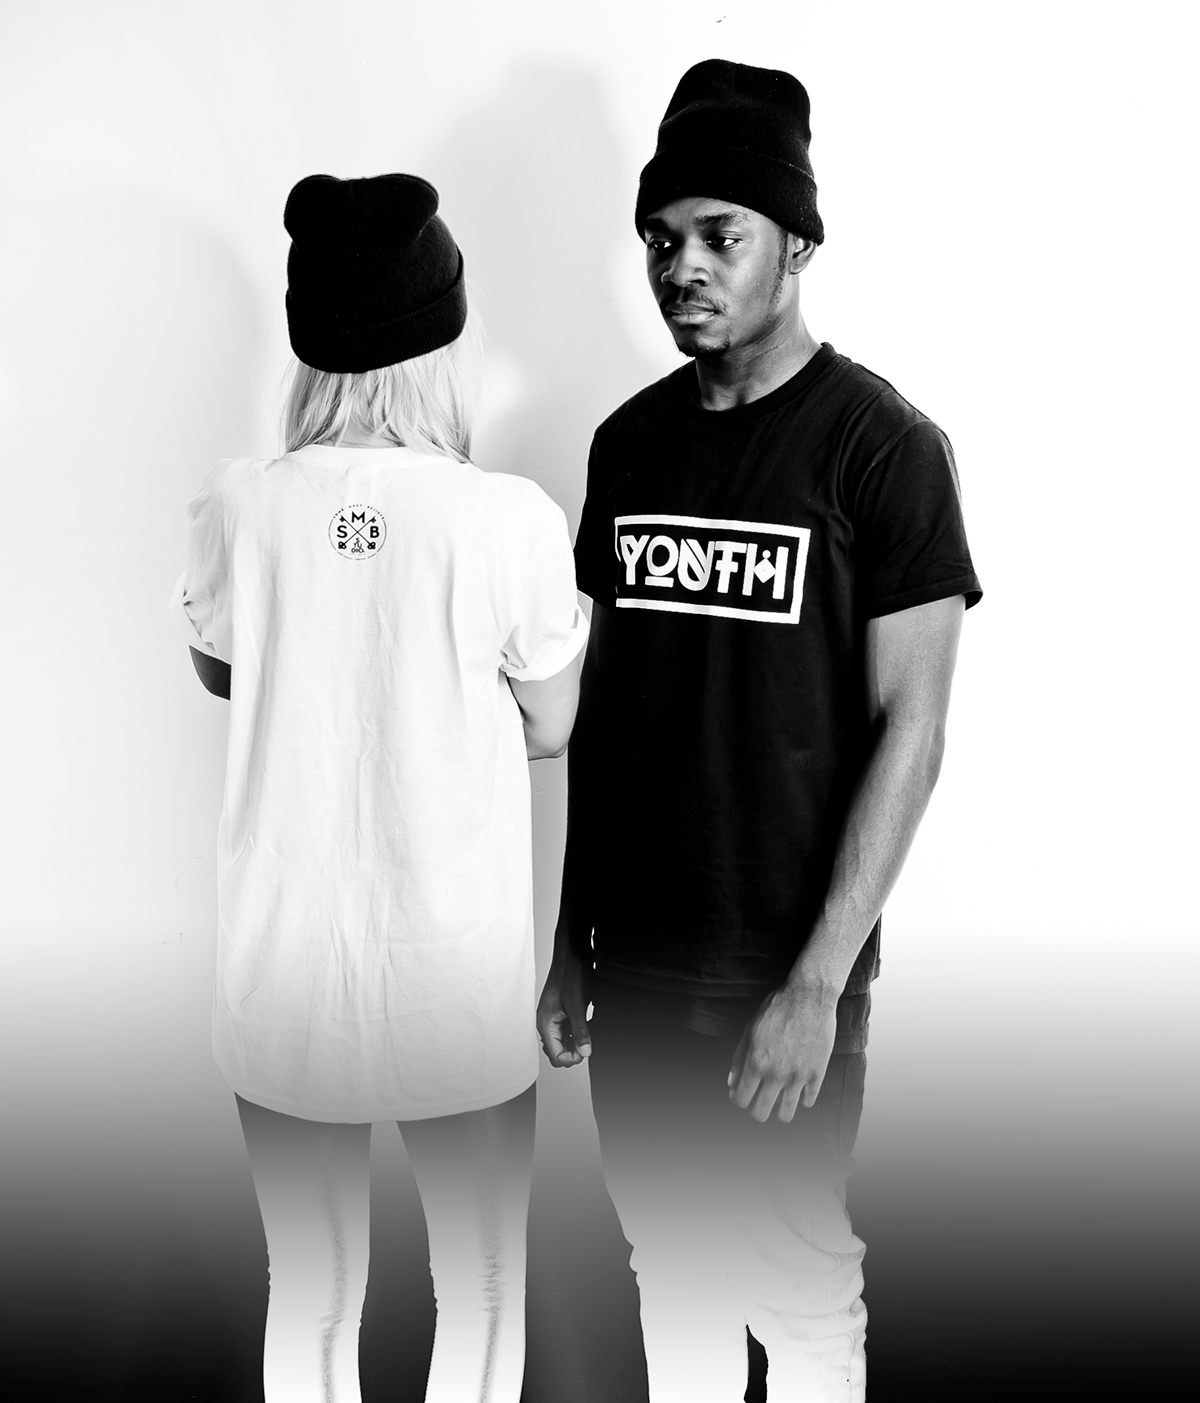 youth t-shirts black White font